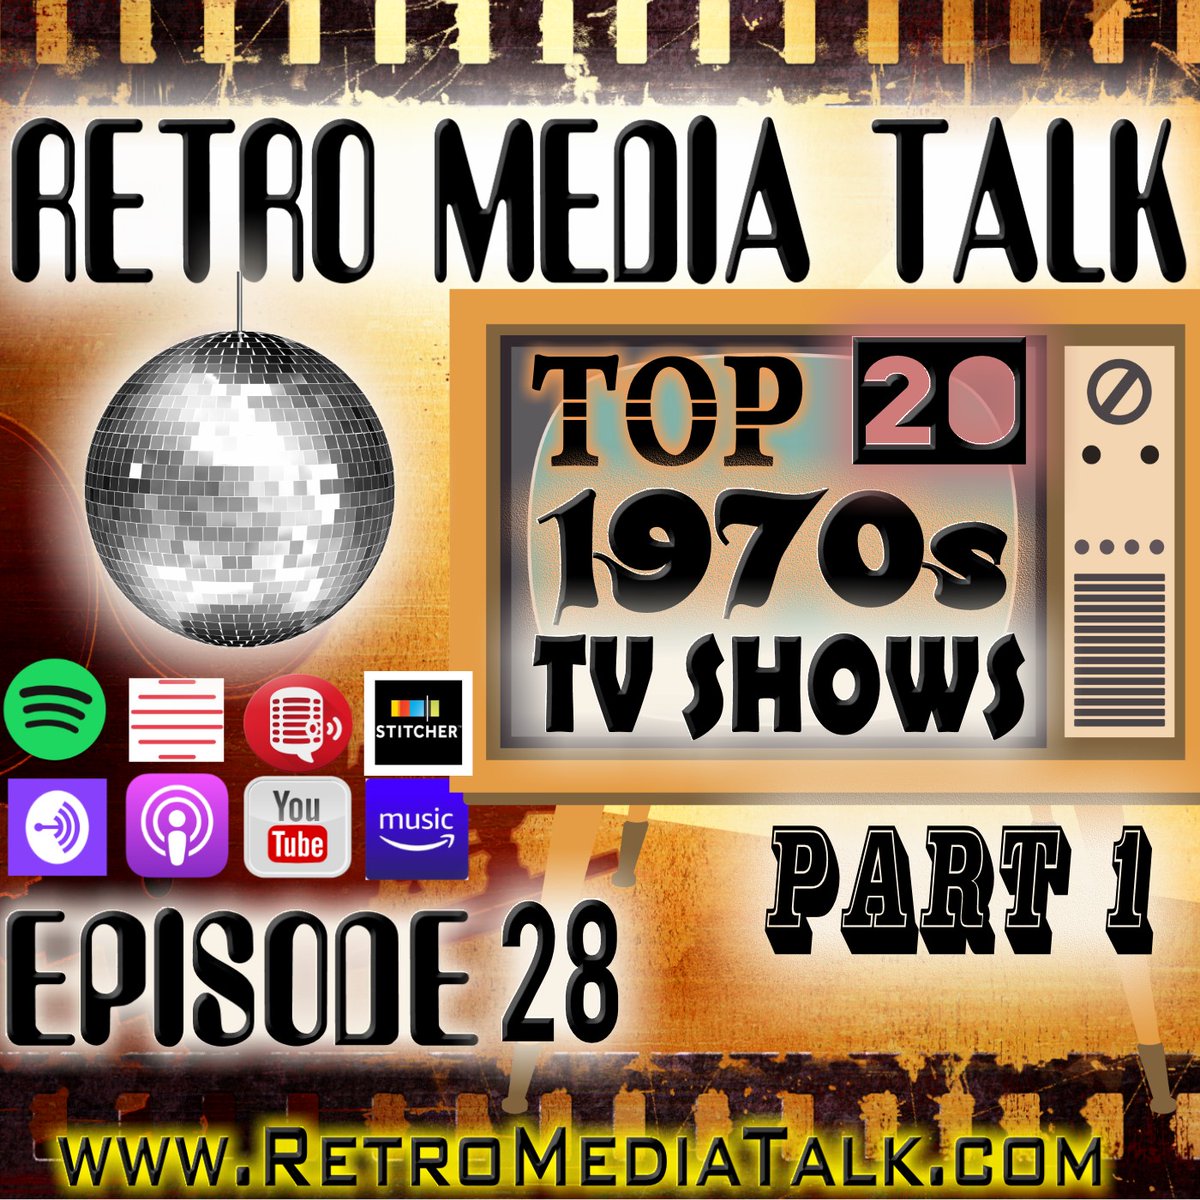 RETRO MEDIA TALK PODCAST: TOP 20 1970s TV SHOWS Part 1 - Episode 28 retromediatalk.com/2023/02/top-20…
📺 
#podcast #podcasts #70s #70stvshows #retromedia #retrotv #retro #PodcastAndChill #tvshows #tvshow